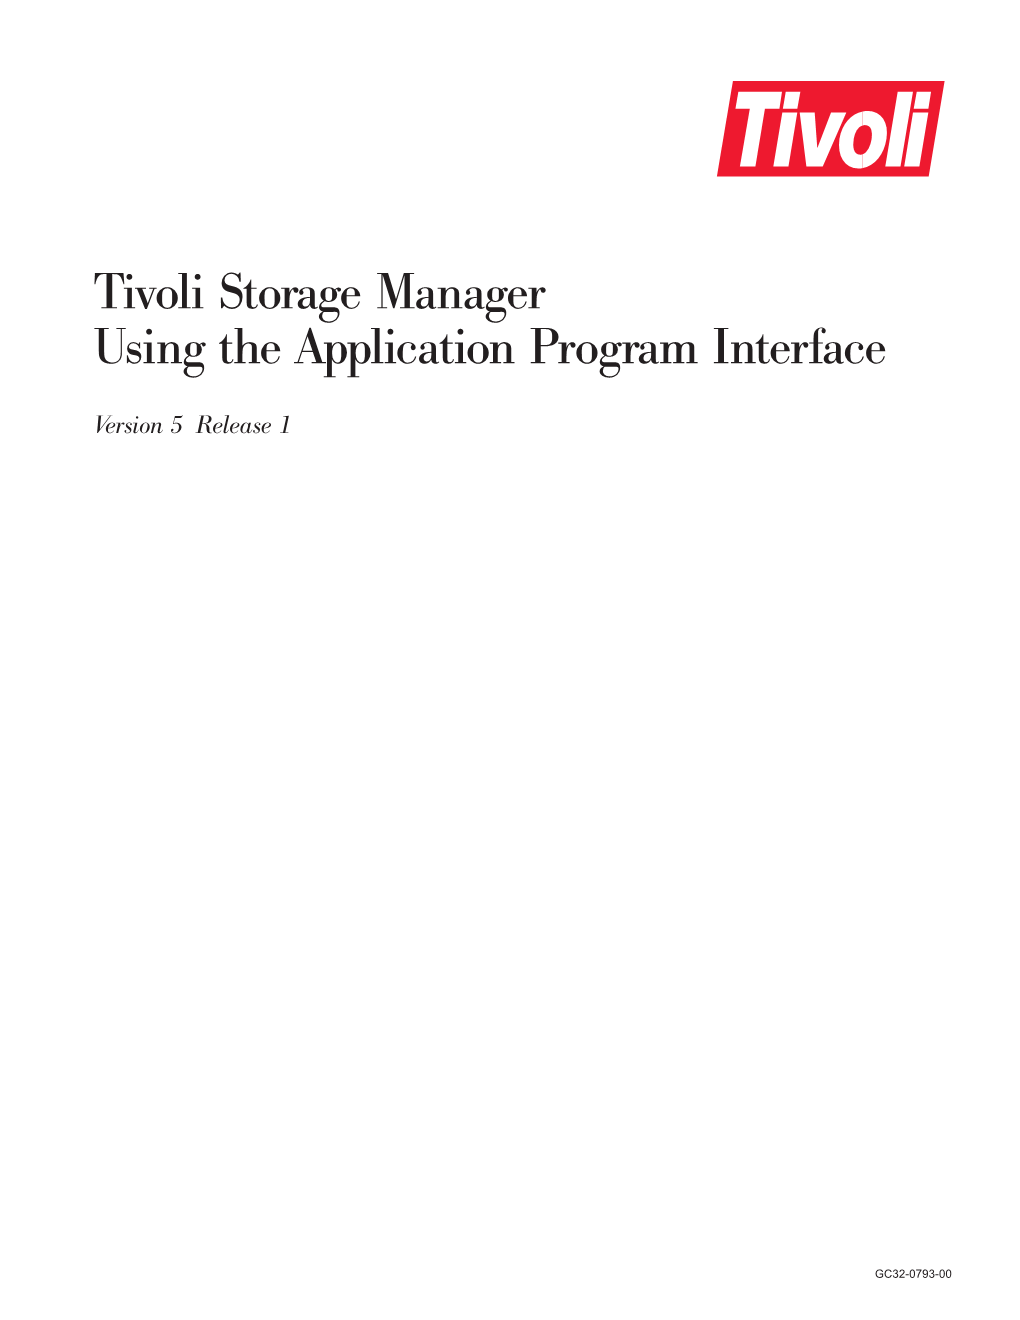 Tivoli Storage Manager Using the Application Program Interface